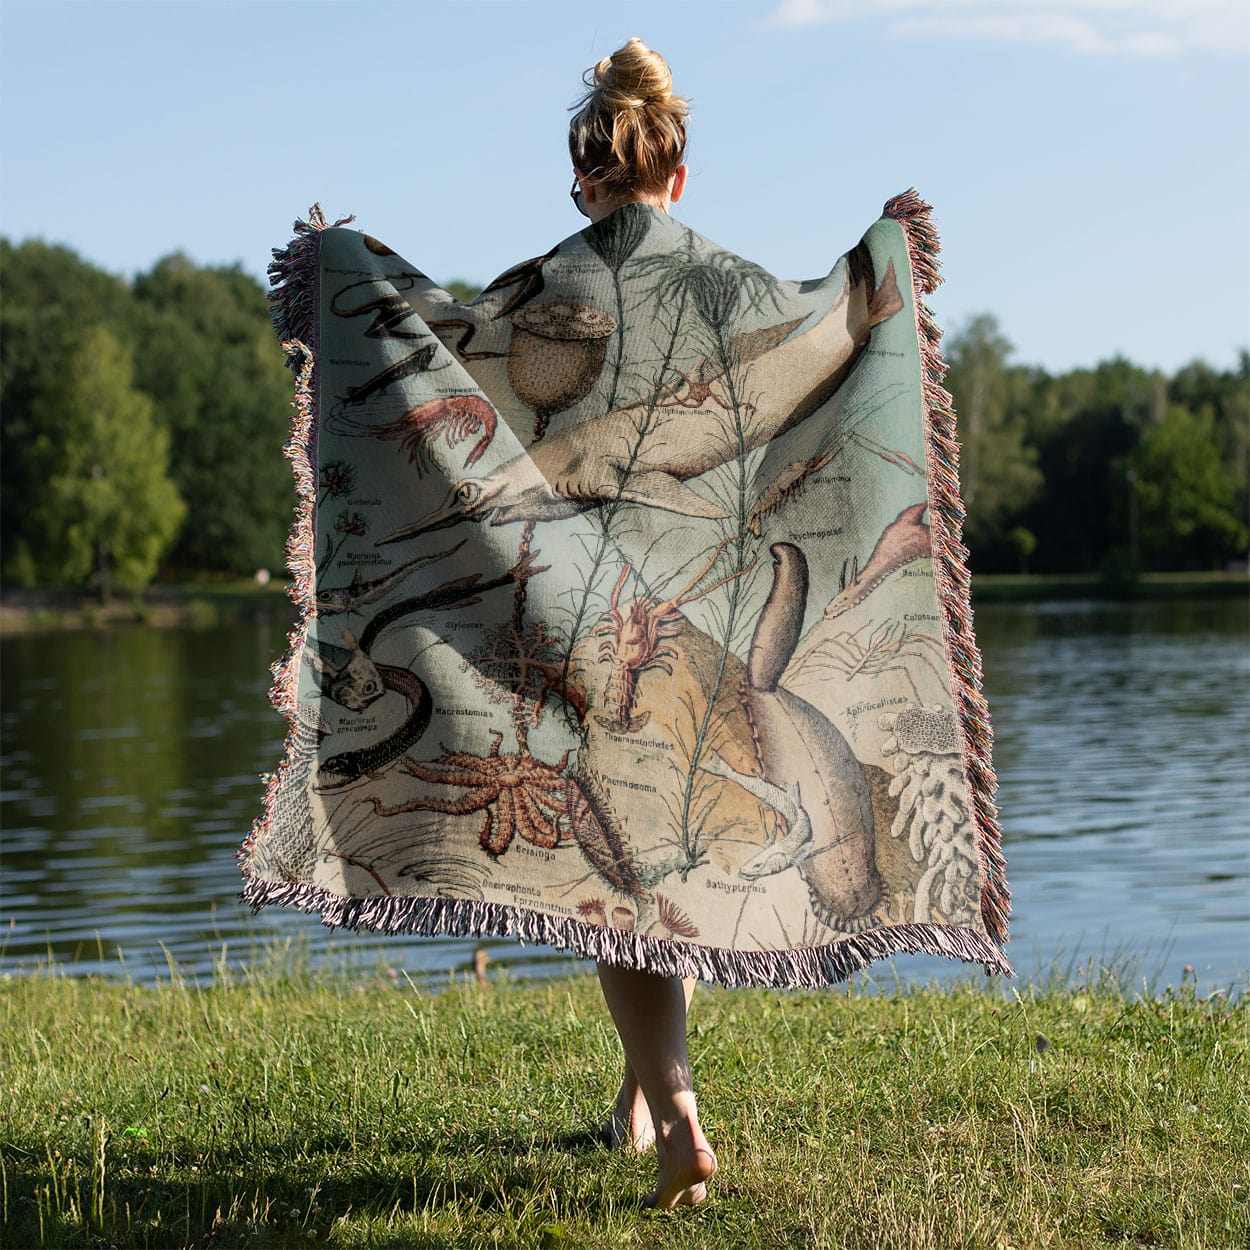 Vintage Ocean Woven Blanket Held on a Woman's Back Outside